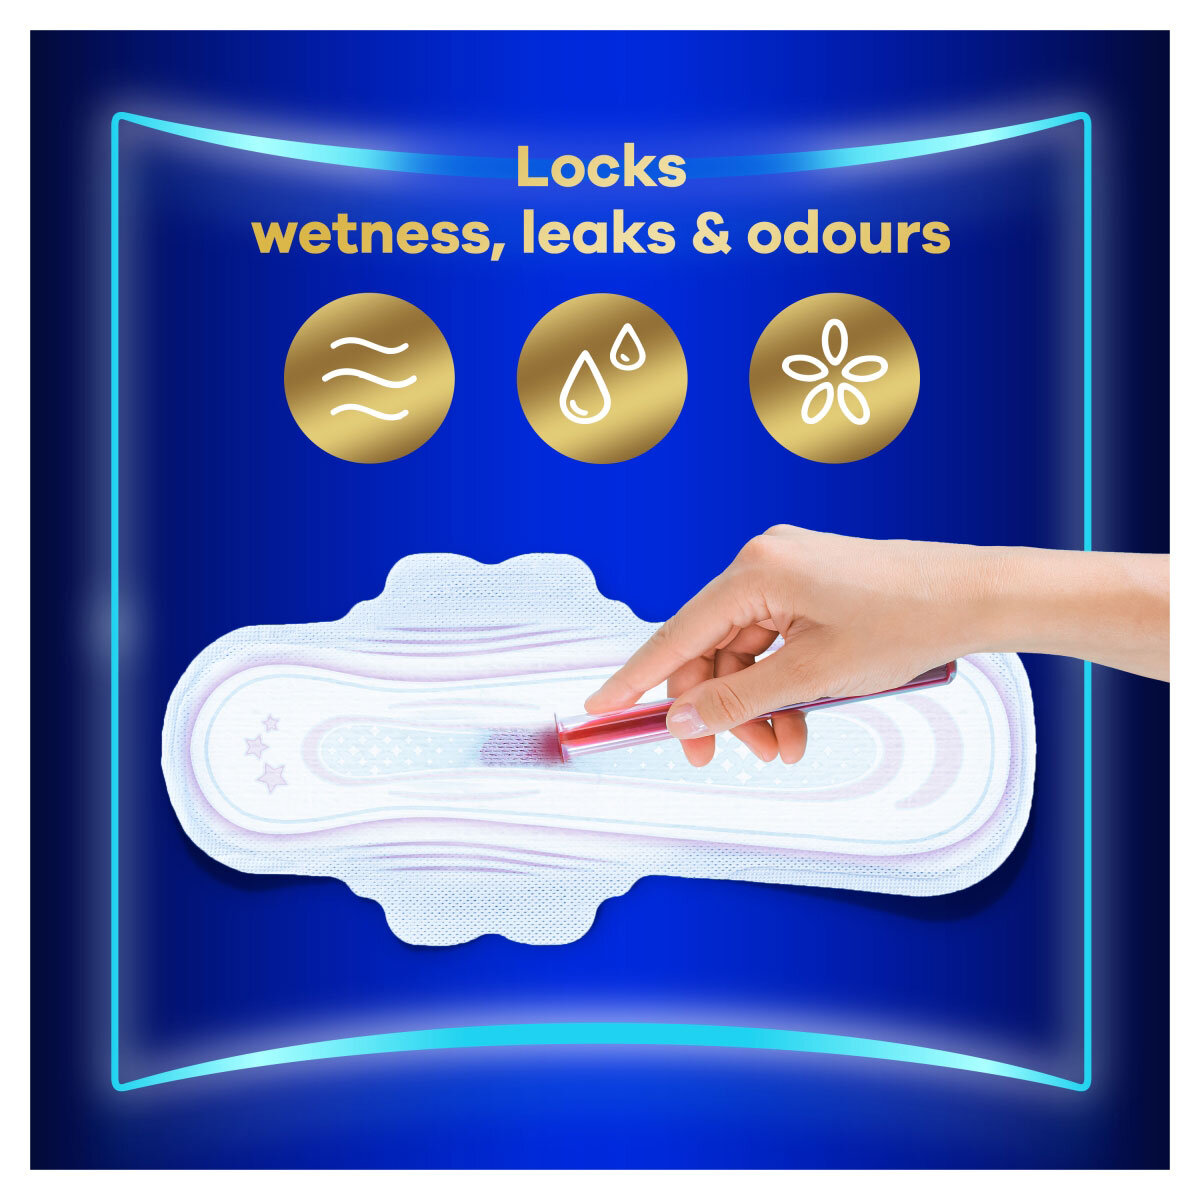 Lock wetness, leaks & odurs